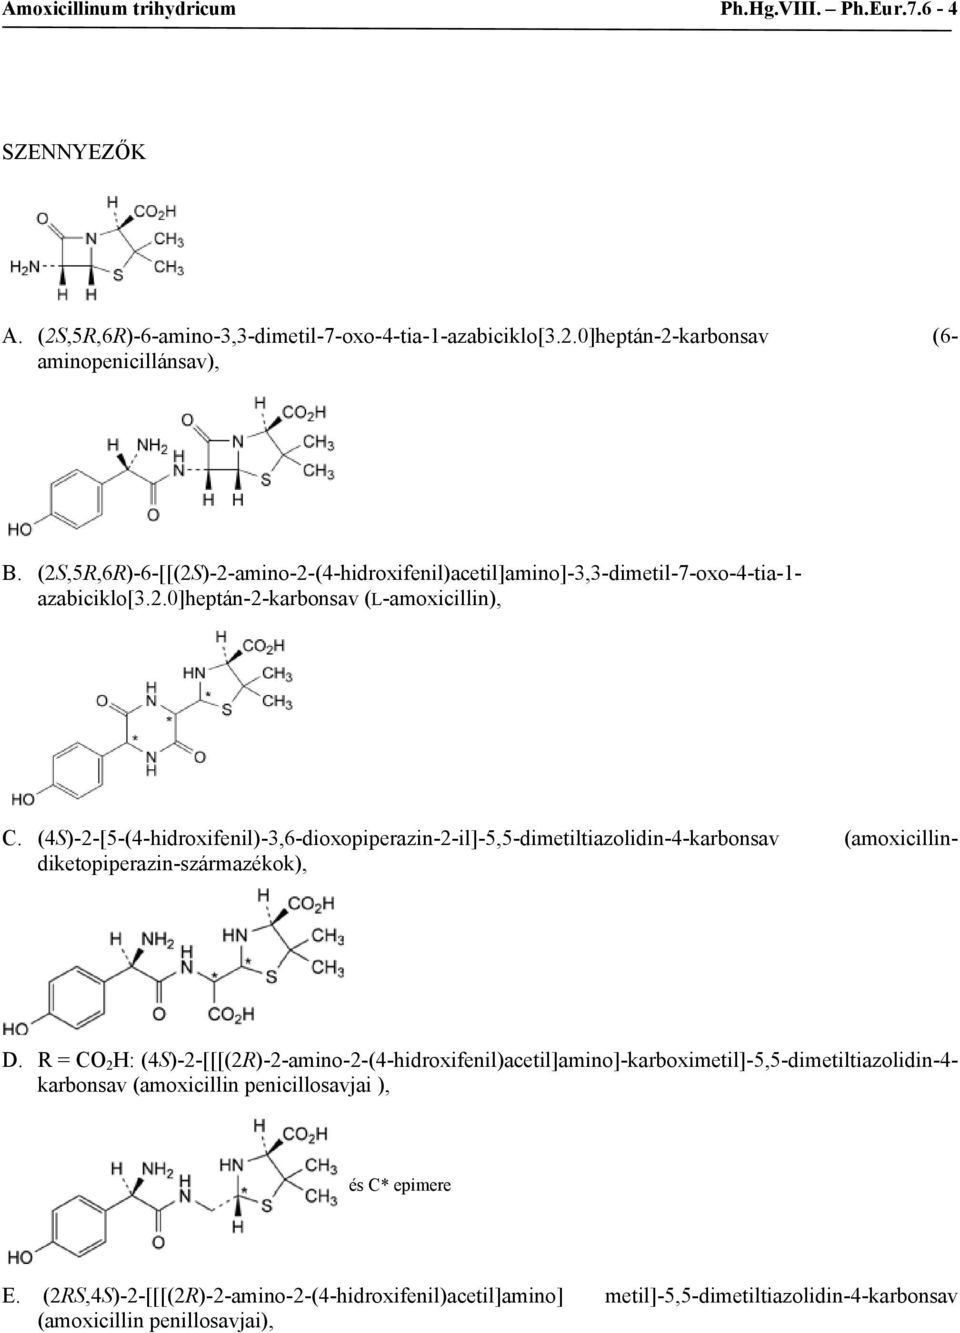 (4S)-2-[5-(4-hidroxifenil)-3,6-dioxopiperazin-2-il]-5,5-dimetiltiazolidin-4-karbonsav (amoxicillindiketopiperazin-származékok), D.